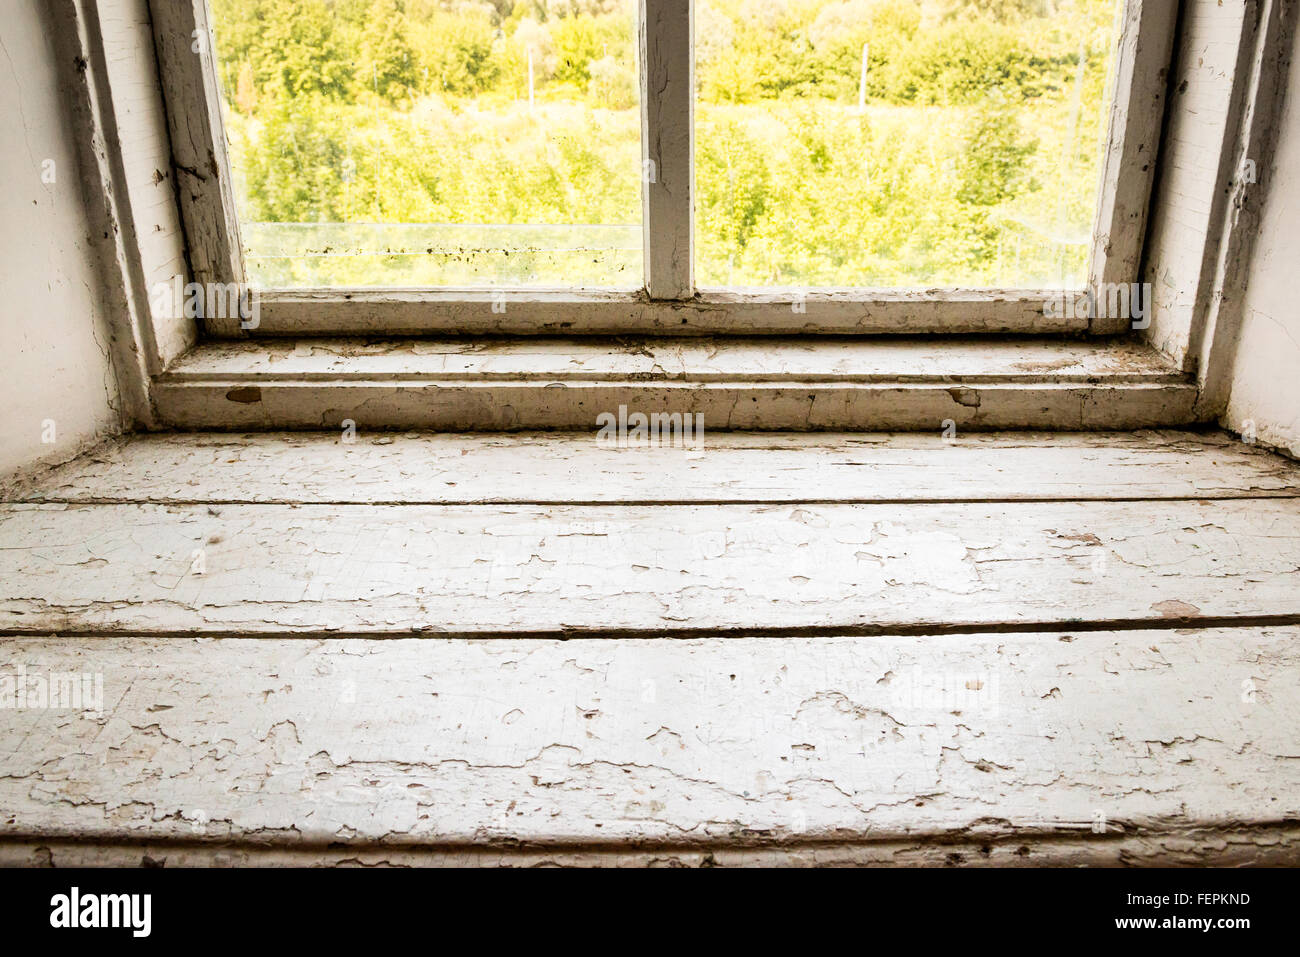 Shabby window sill Stock Photo